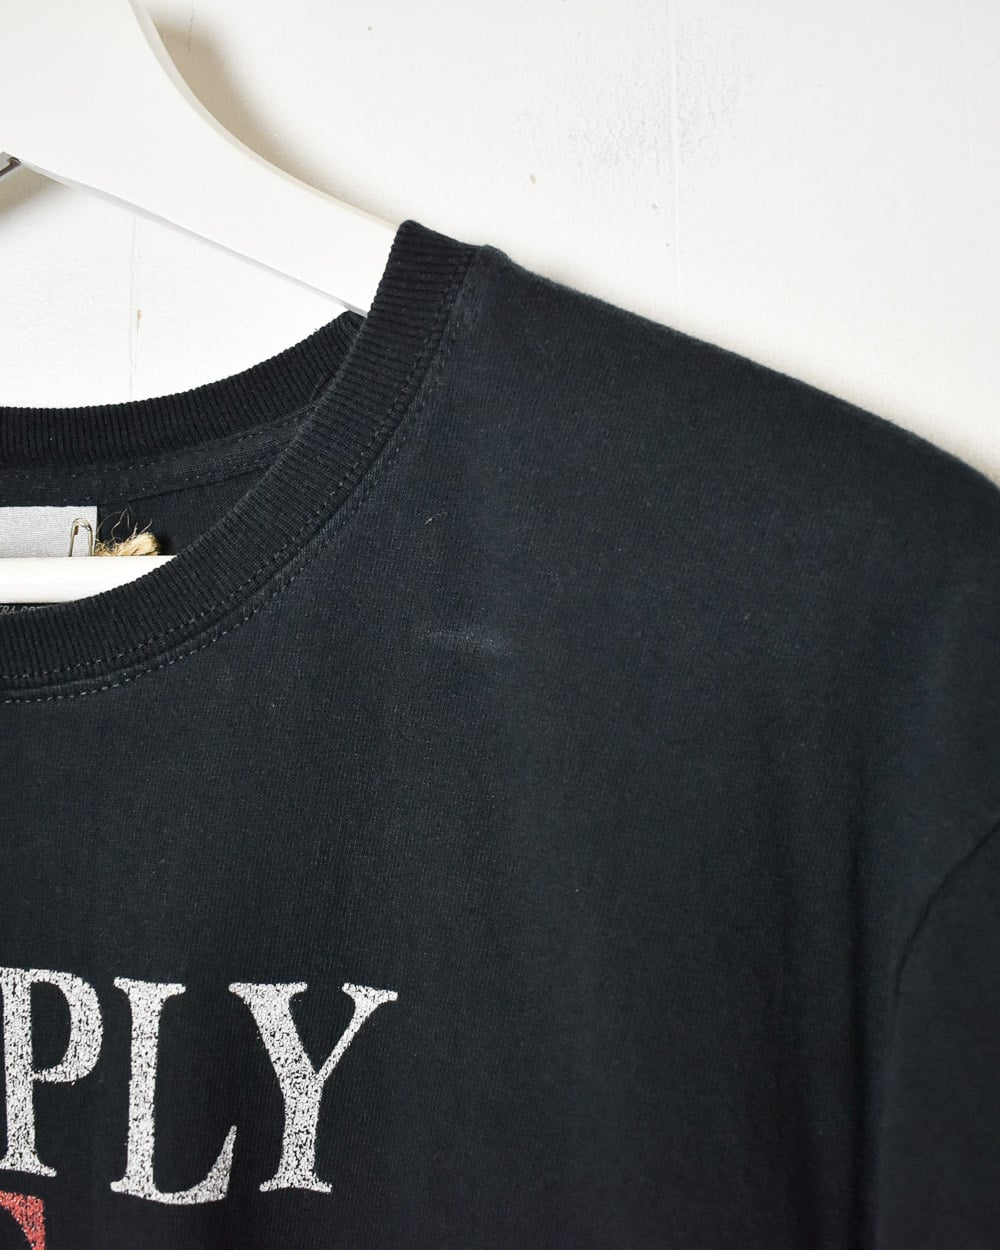 Black Simply Perfect Snoopy Graphic T-Shirt - Medium